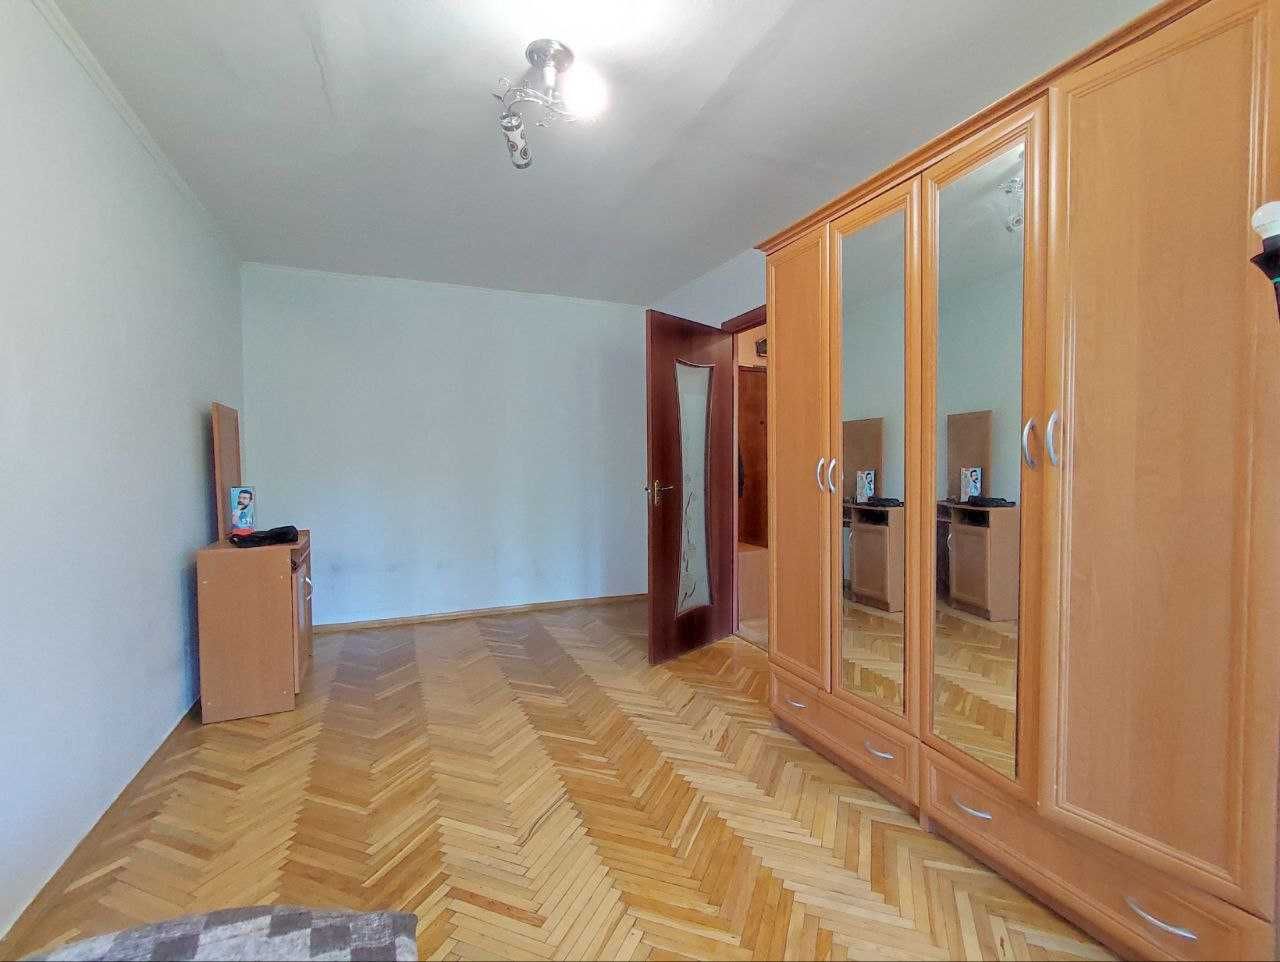 Продаж 1 кімнатної квартири по вул. Шевченка (Дубляни)